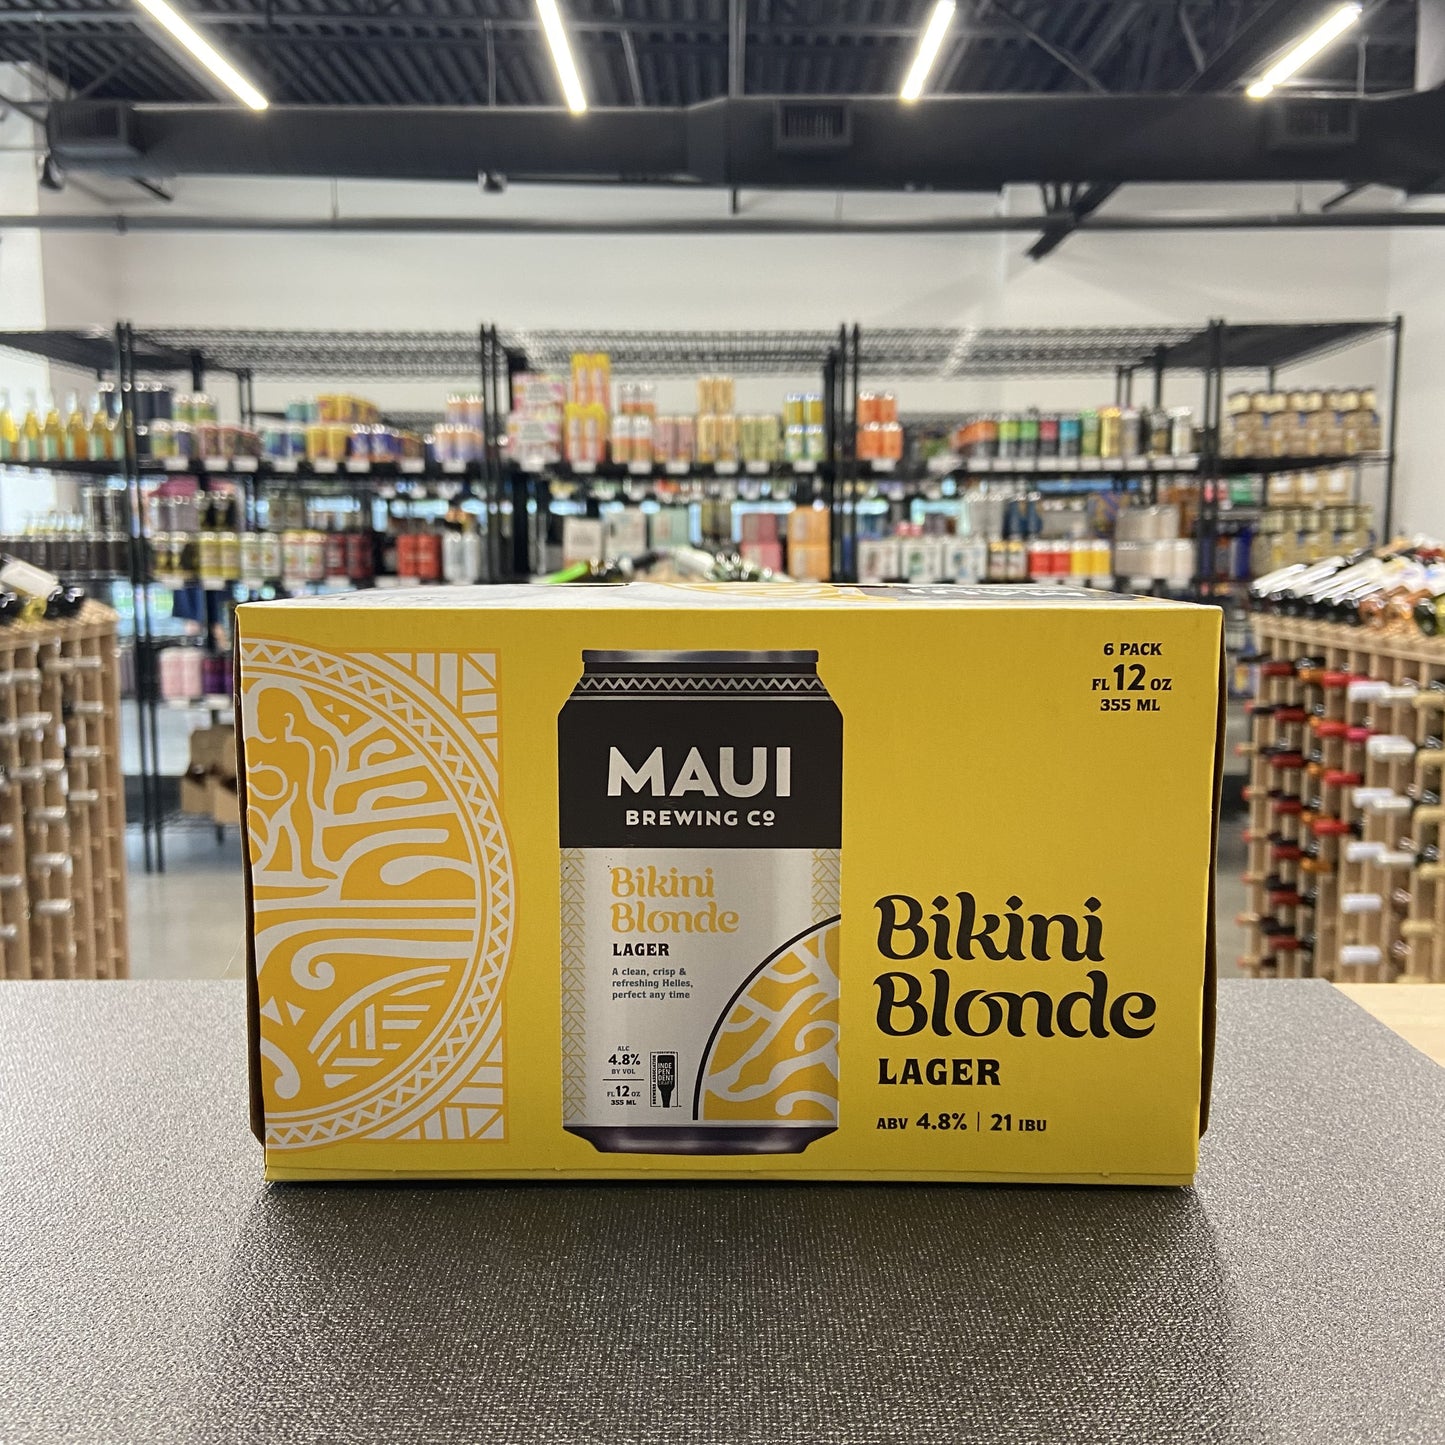 Maui Brewing Co. Bikini Blonde